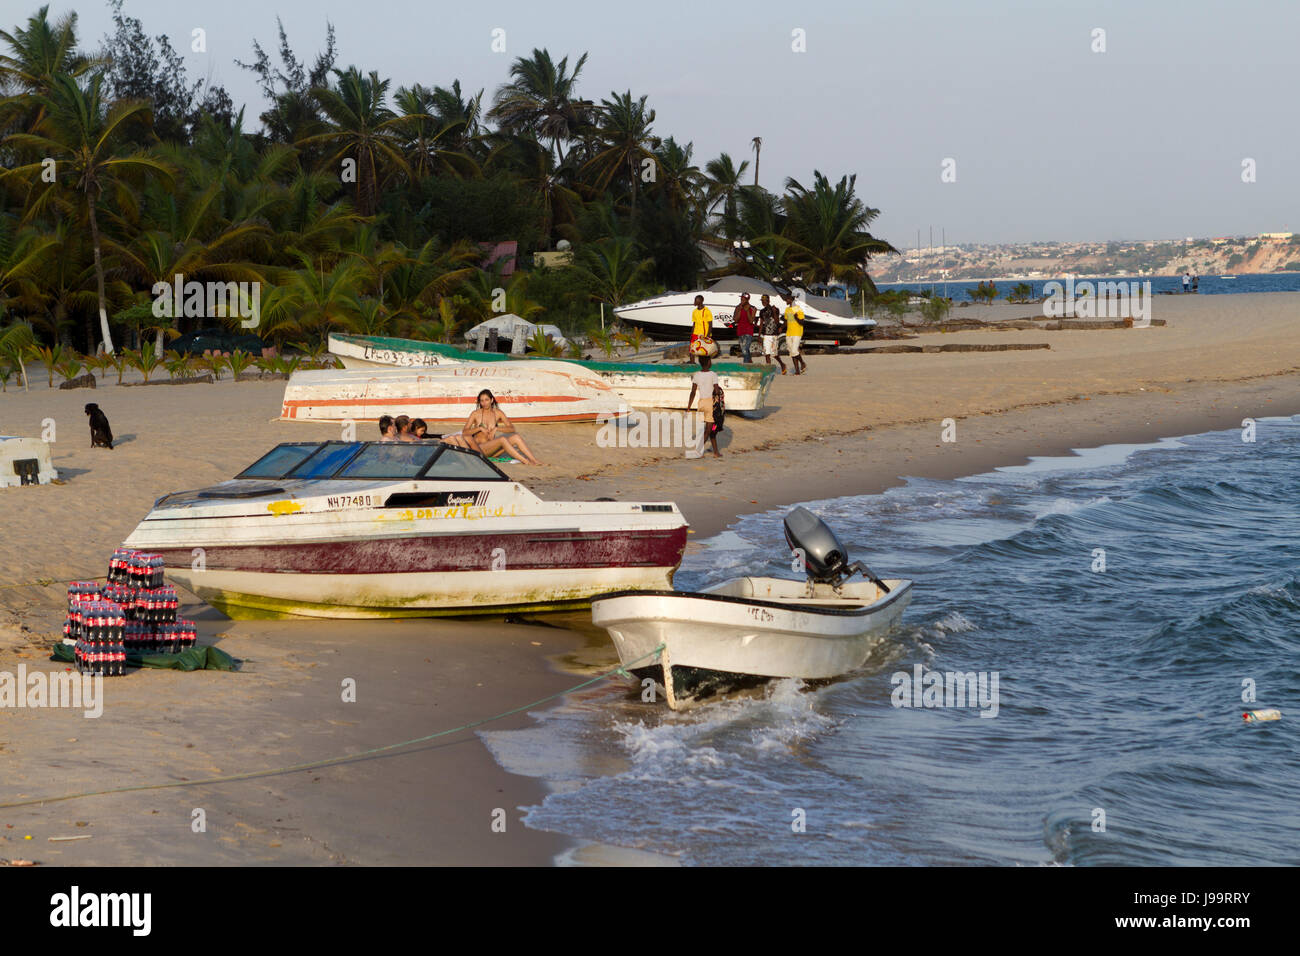 https://c8.alamy.com/comp/J99RRY/boats-in-mussulo-island-luanda-angola-J99RRY.jpg